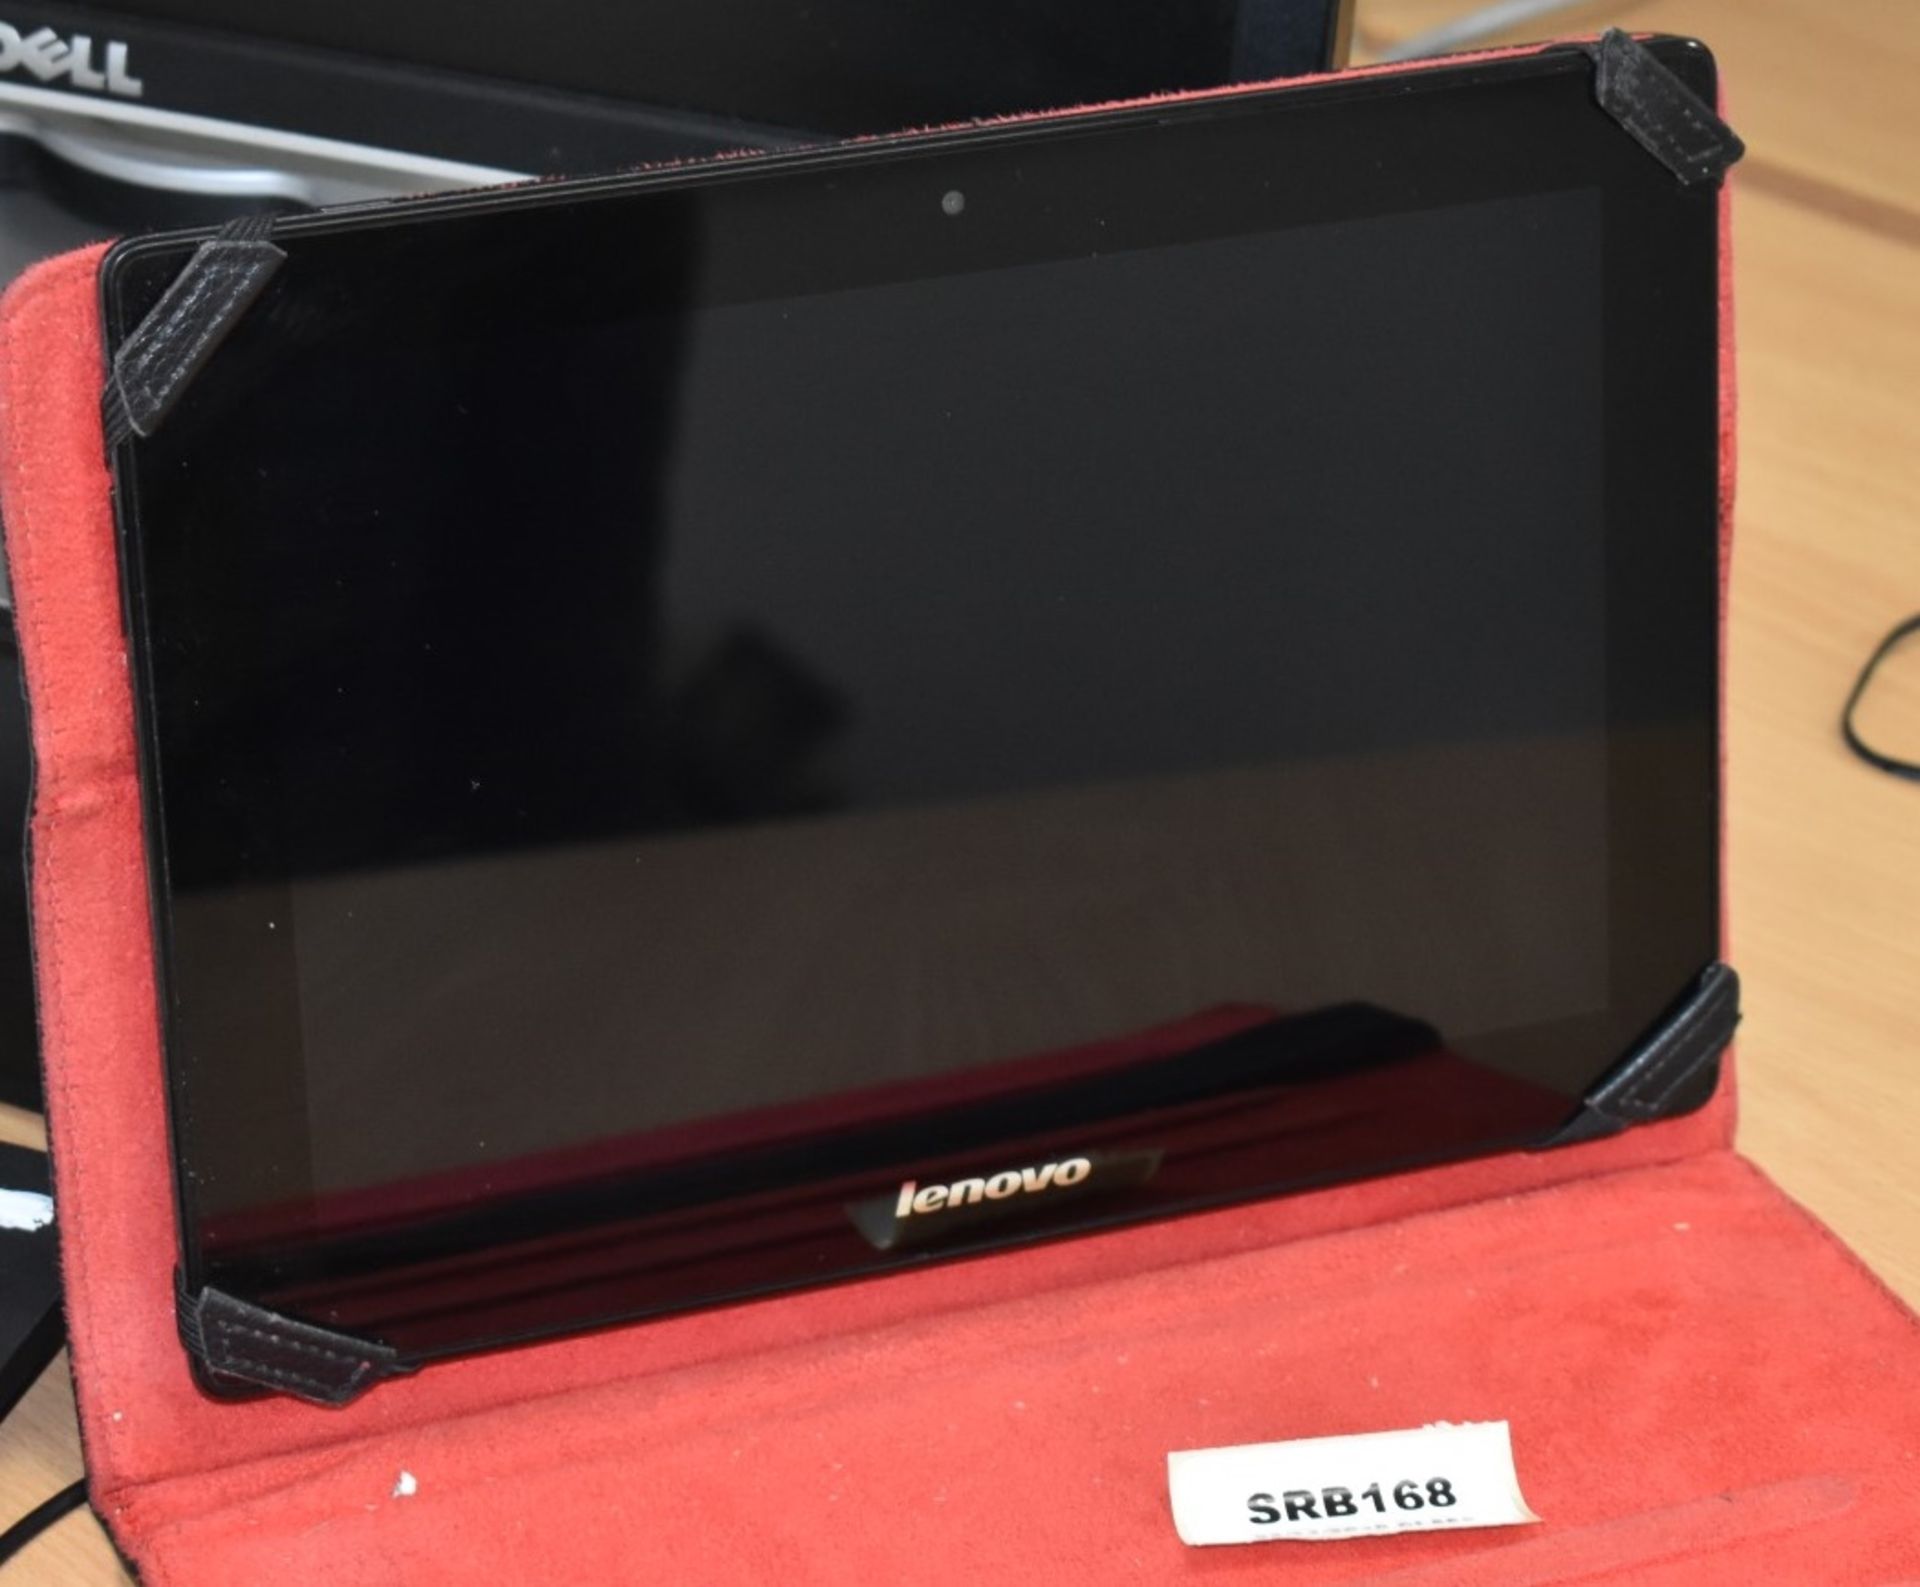 1 x Lenovo S6000 10.1inch Tablet Featuring a Quad Core 1.2GHz Processor, 1GB RAM, 32GB Storage